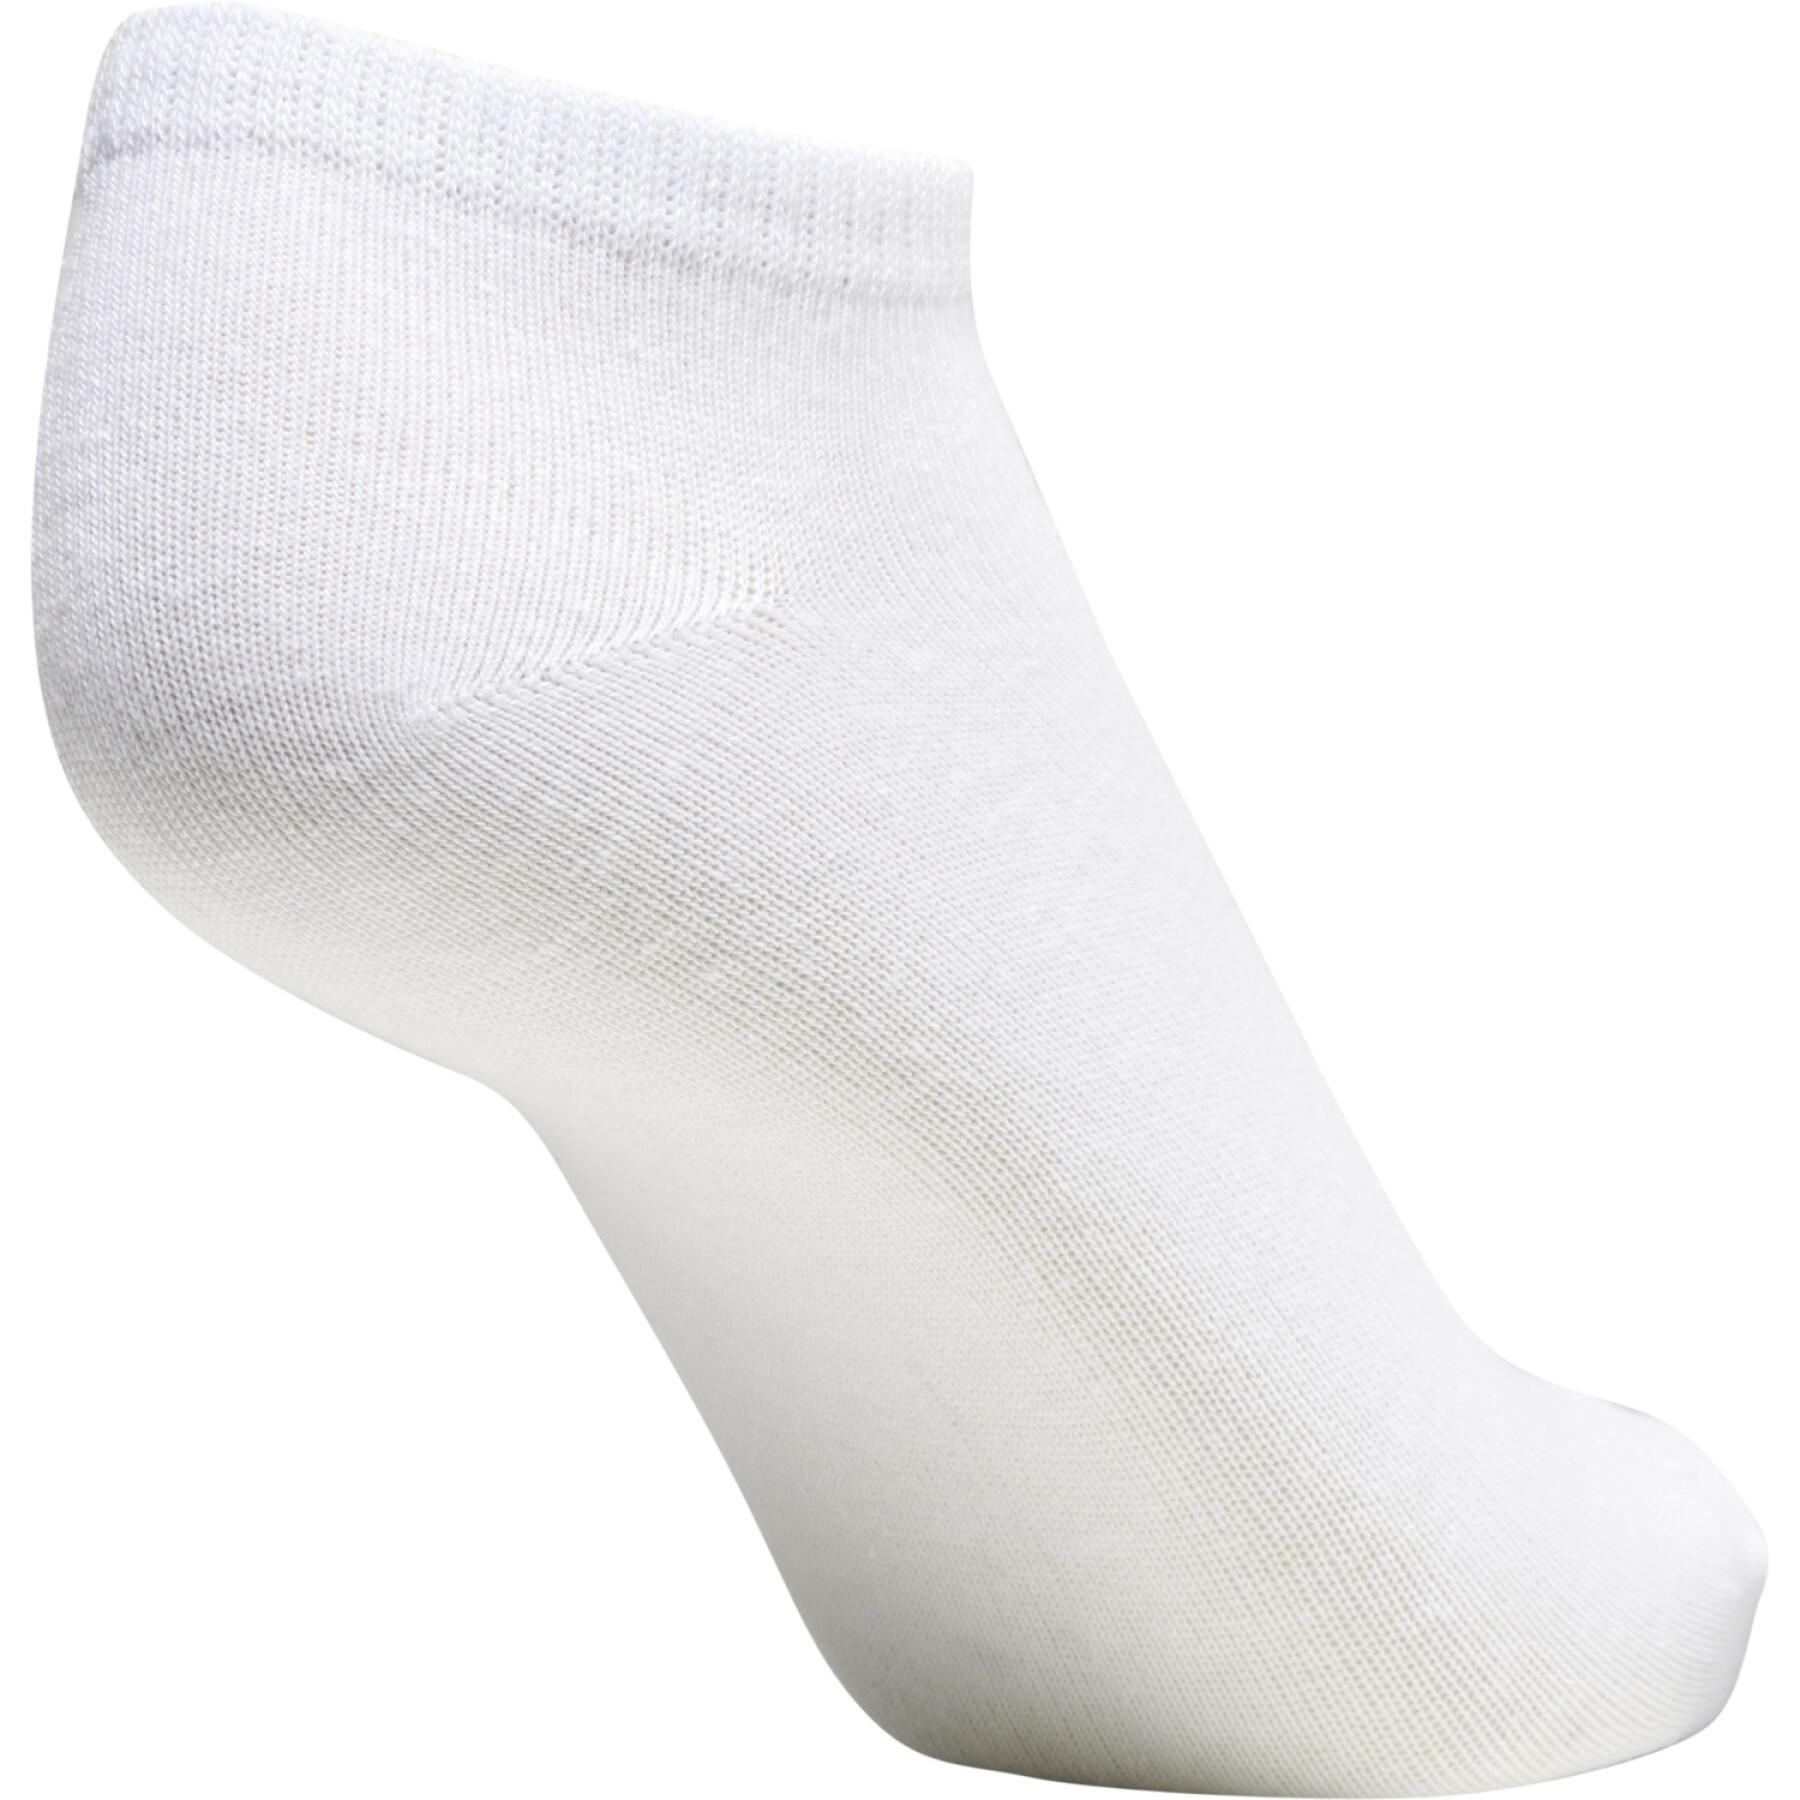 Children's socks Hummel Match me (x5)